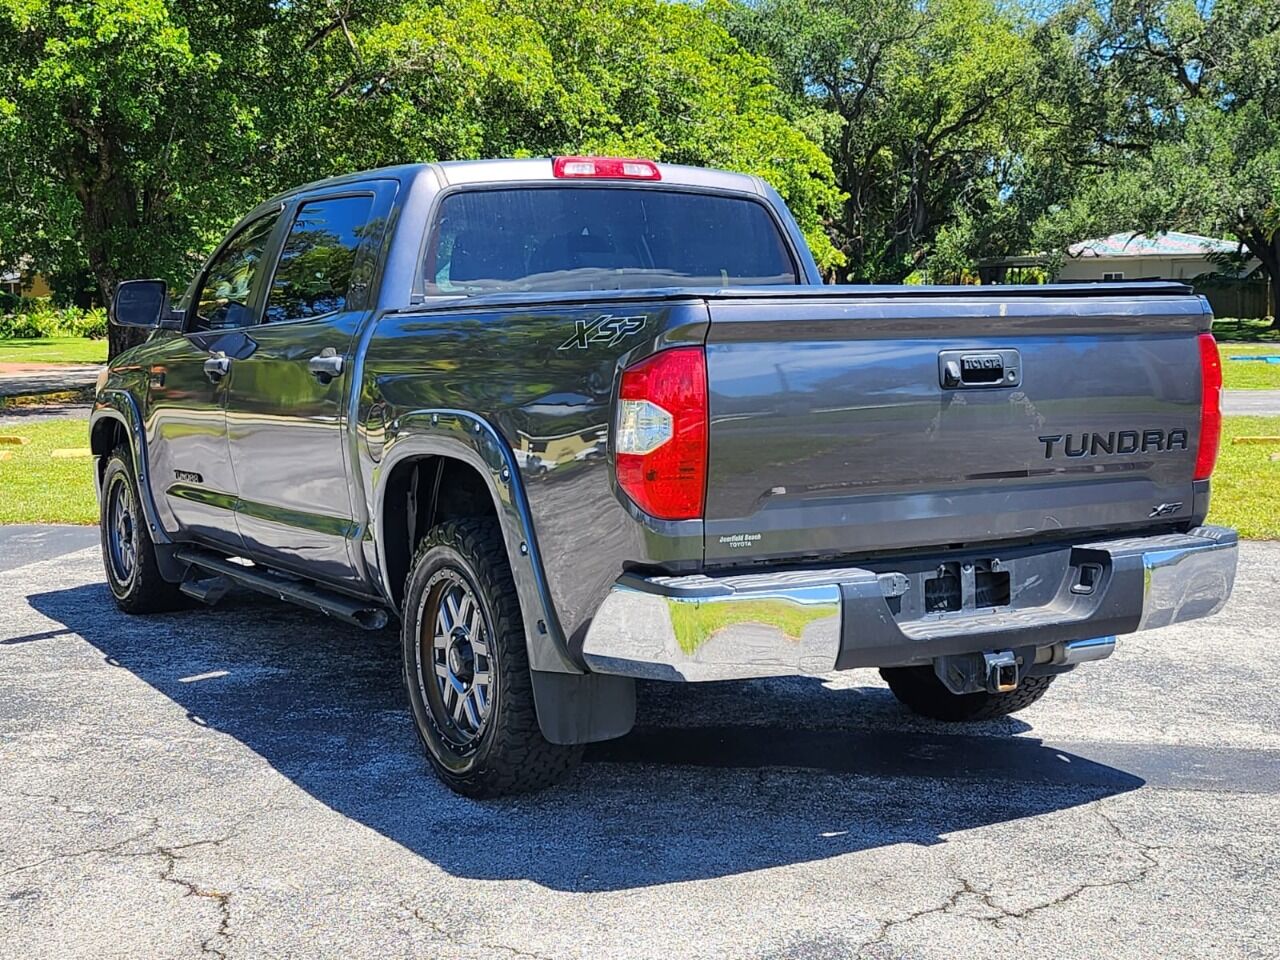 2017 TOYOTA Tundra Pickup - $34,995